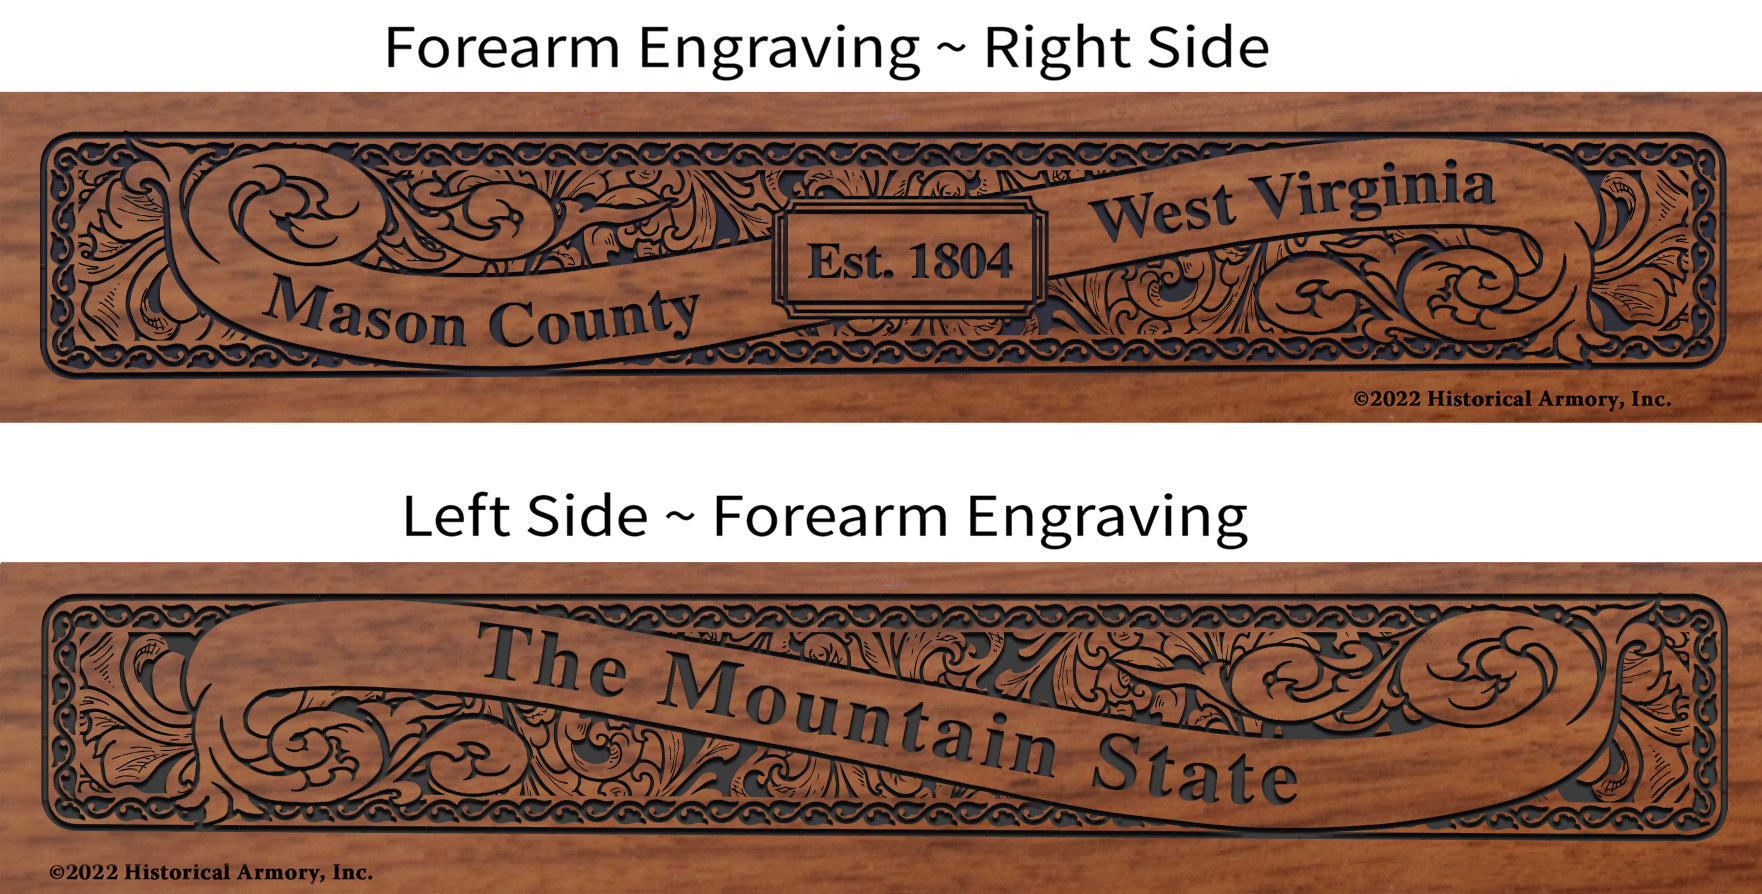 Mason County West Virginia Engraved Rifle Forearm